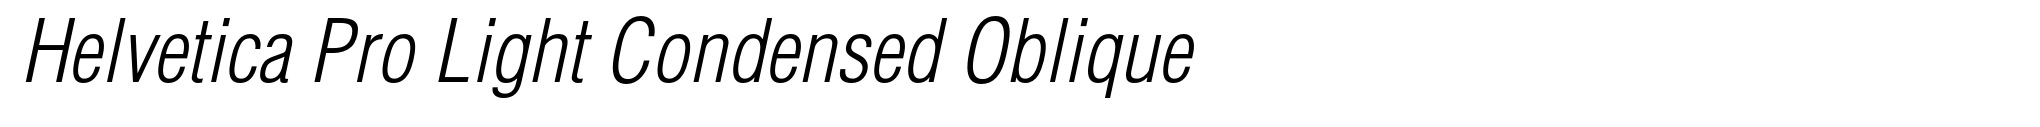 Helvetica Pro Light Condensed Oblique image